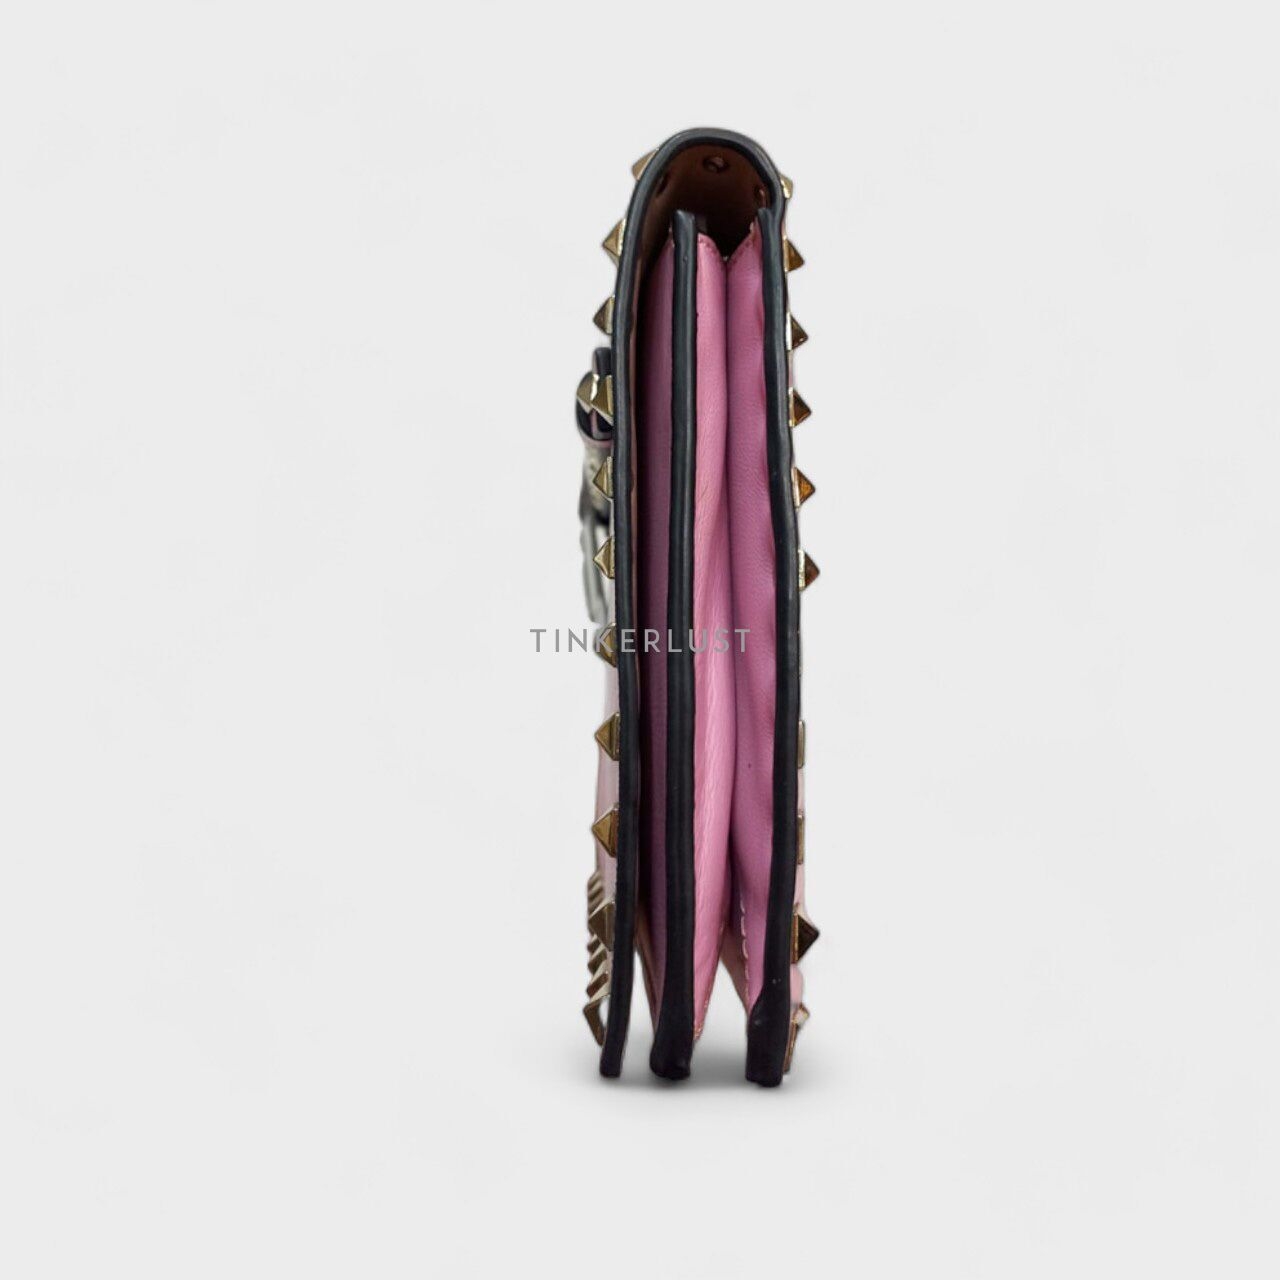 Valentino Garavani Rockstud Medium Leather Pink Clutch